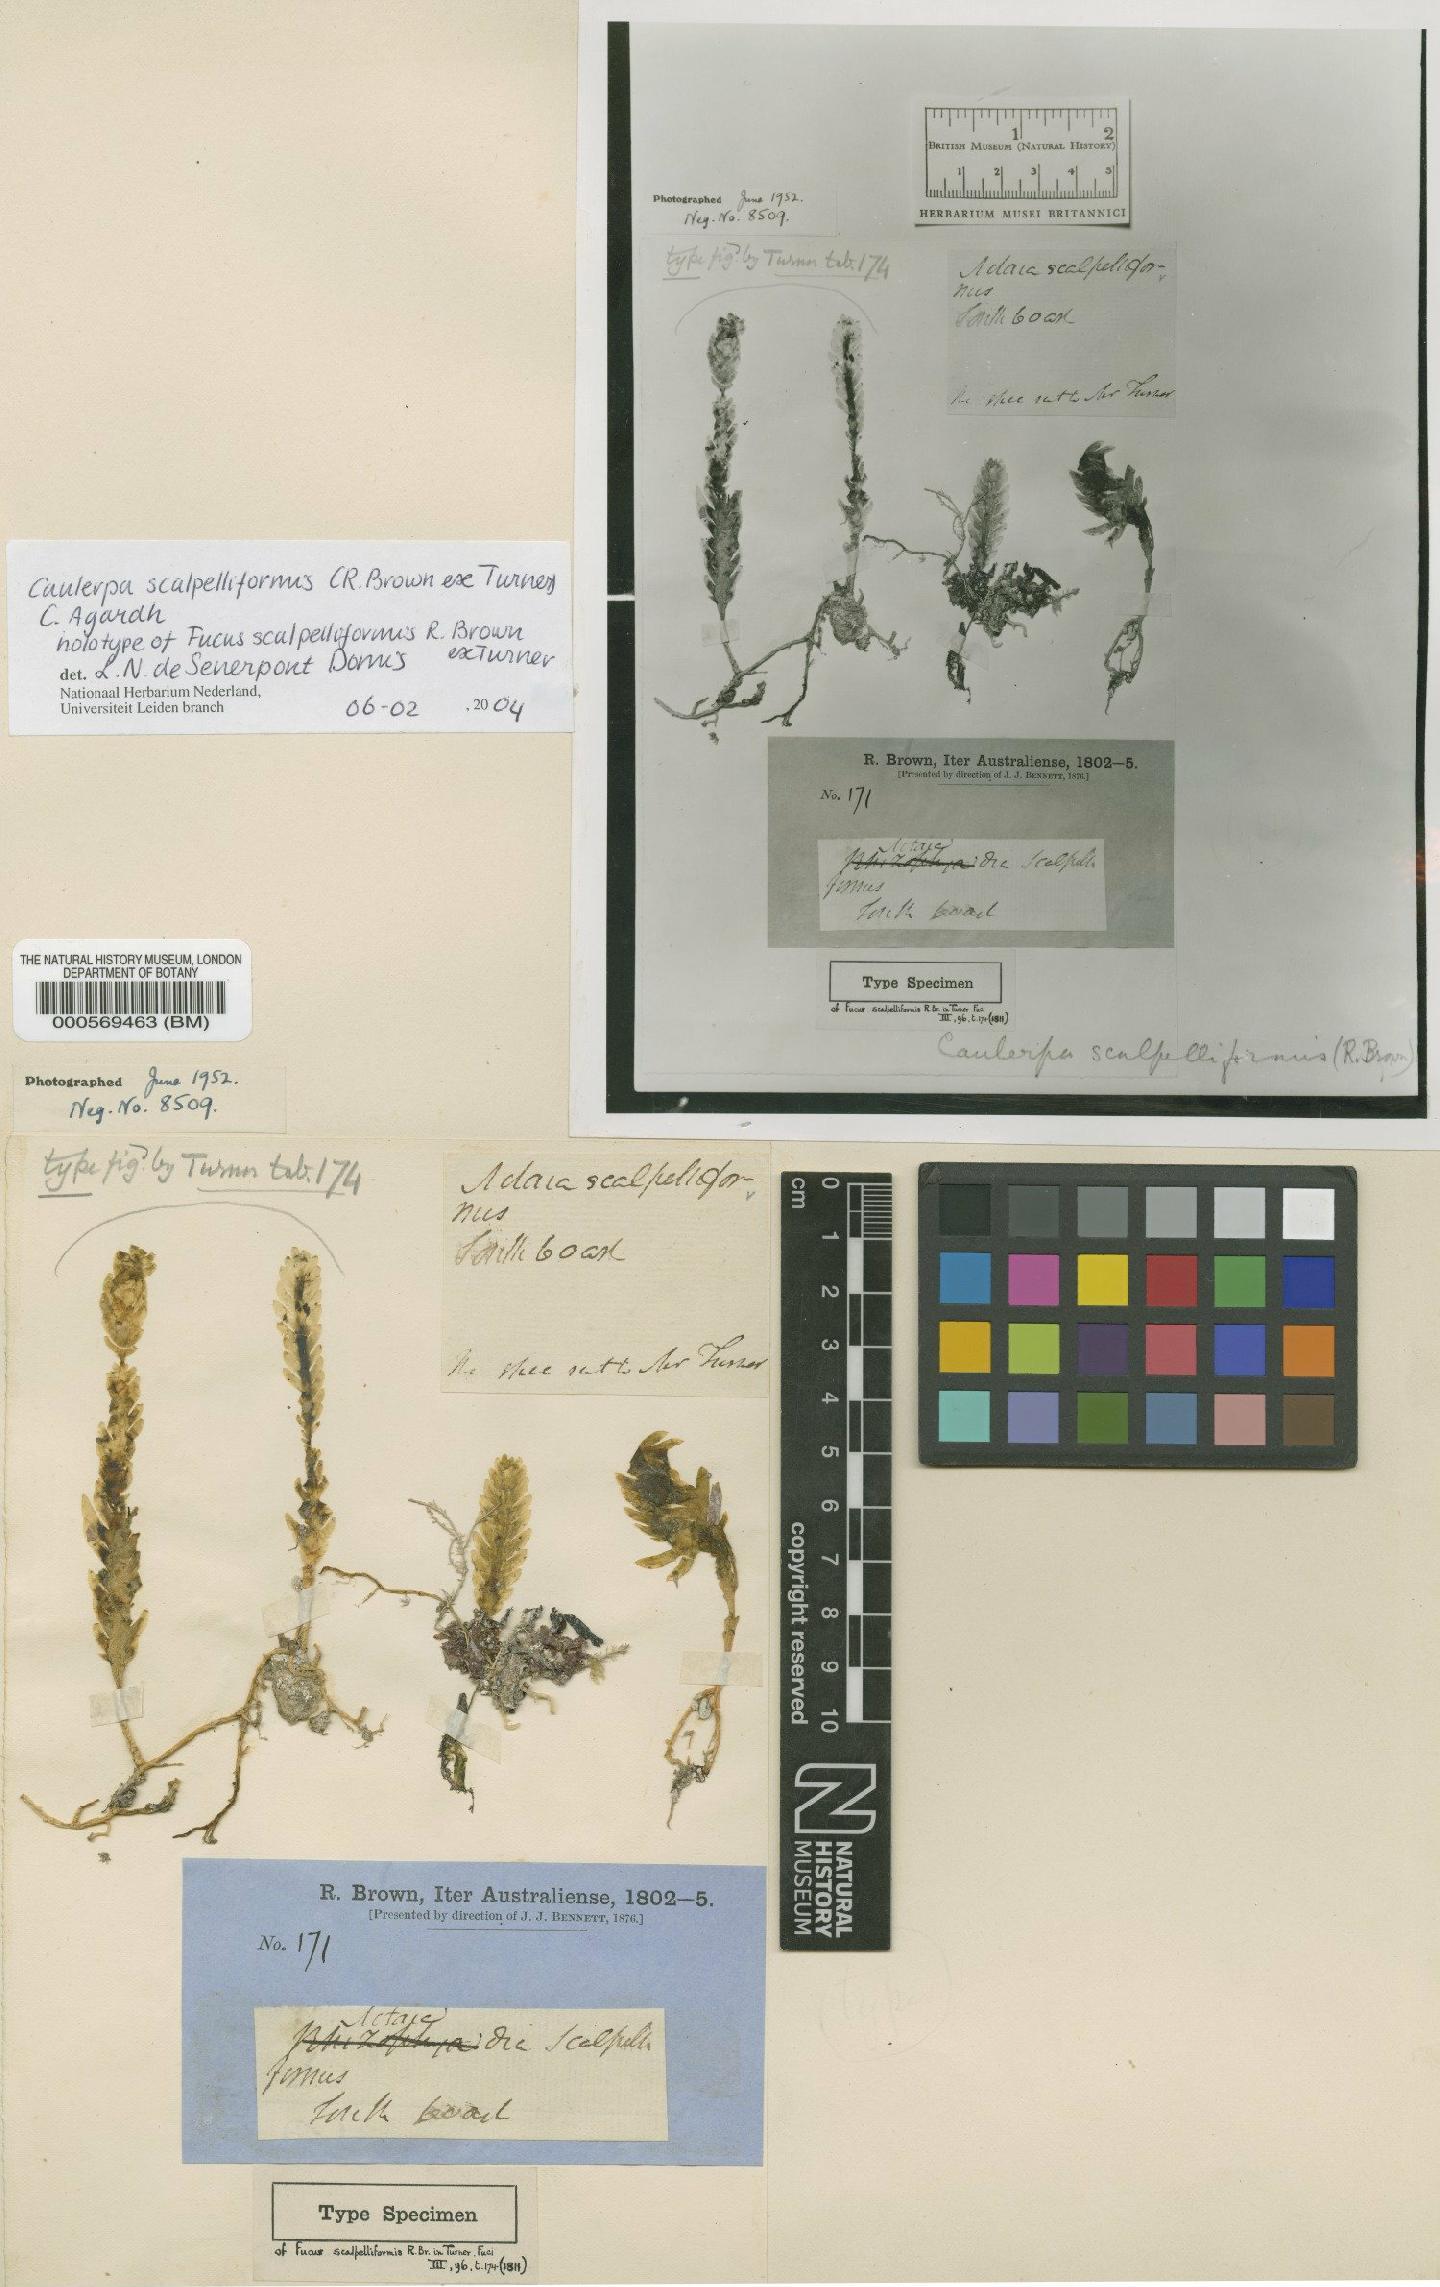 To NHMUK collection (Caulerpa scalpelliformis (R.Br. ex Turner) C.Agardh; Holotype; NHMUK:ecatalogue:4829998)